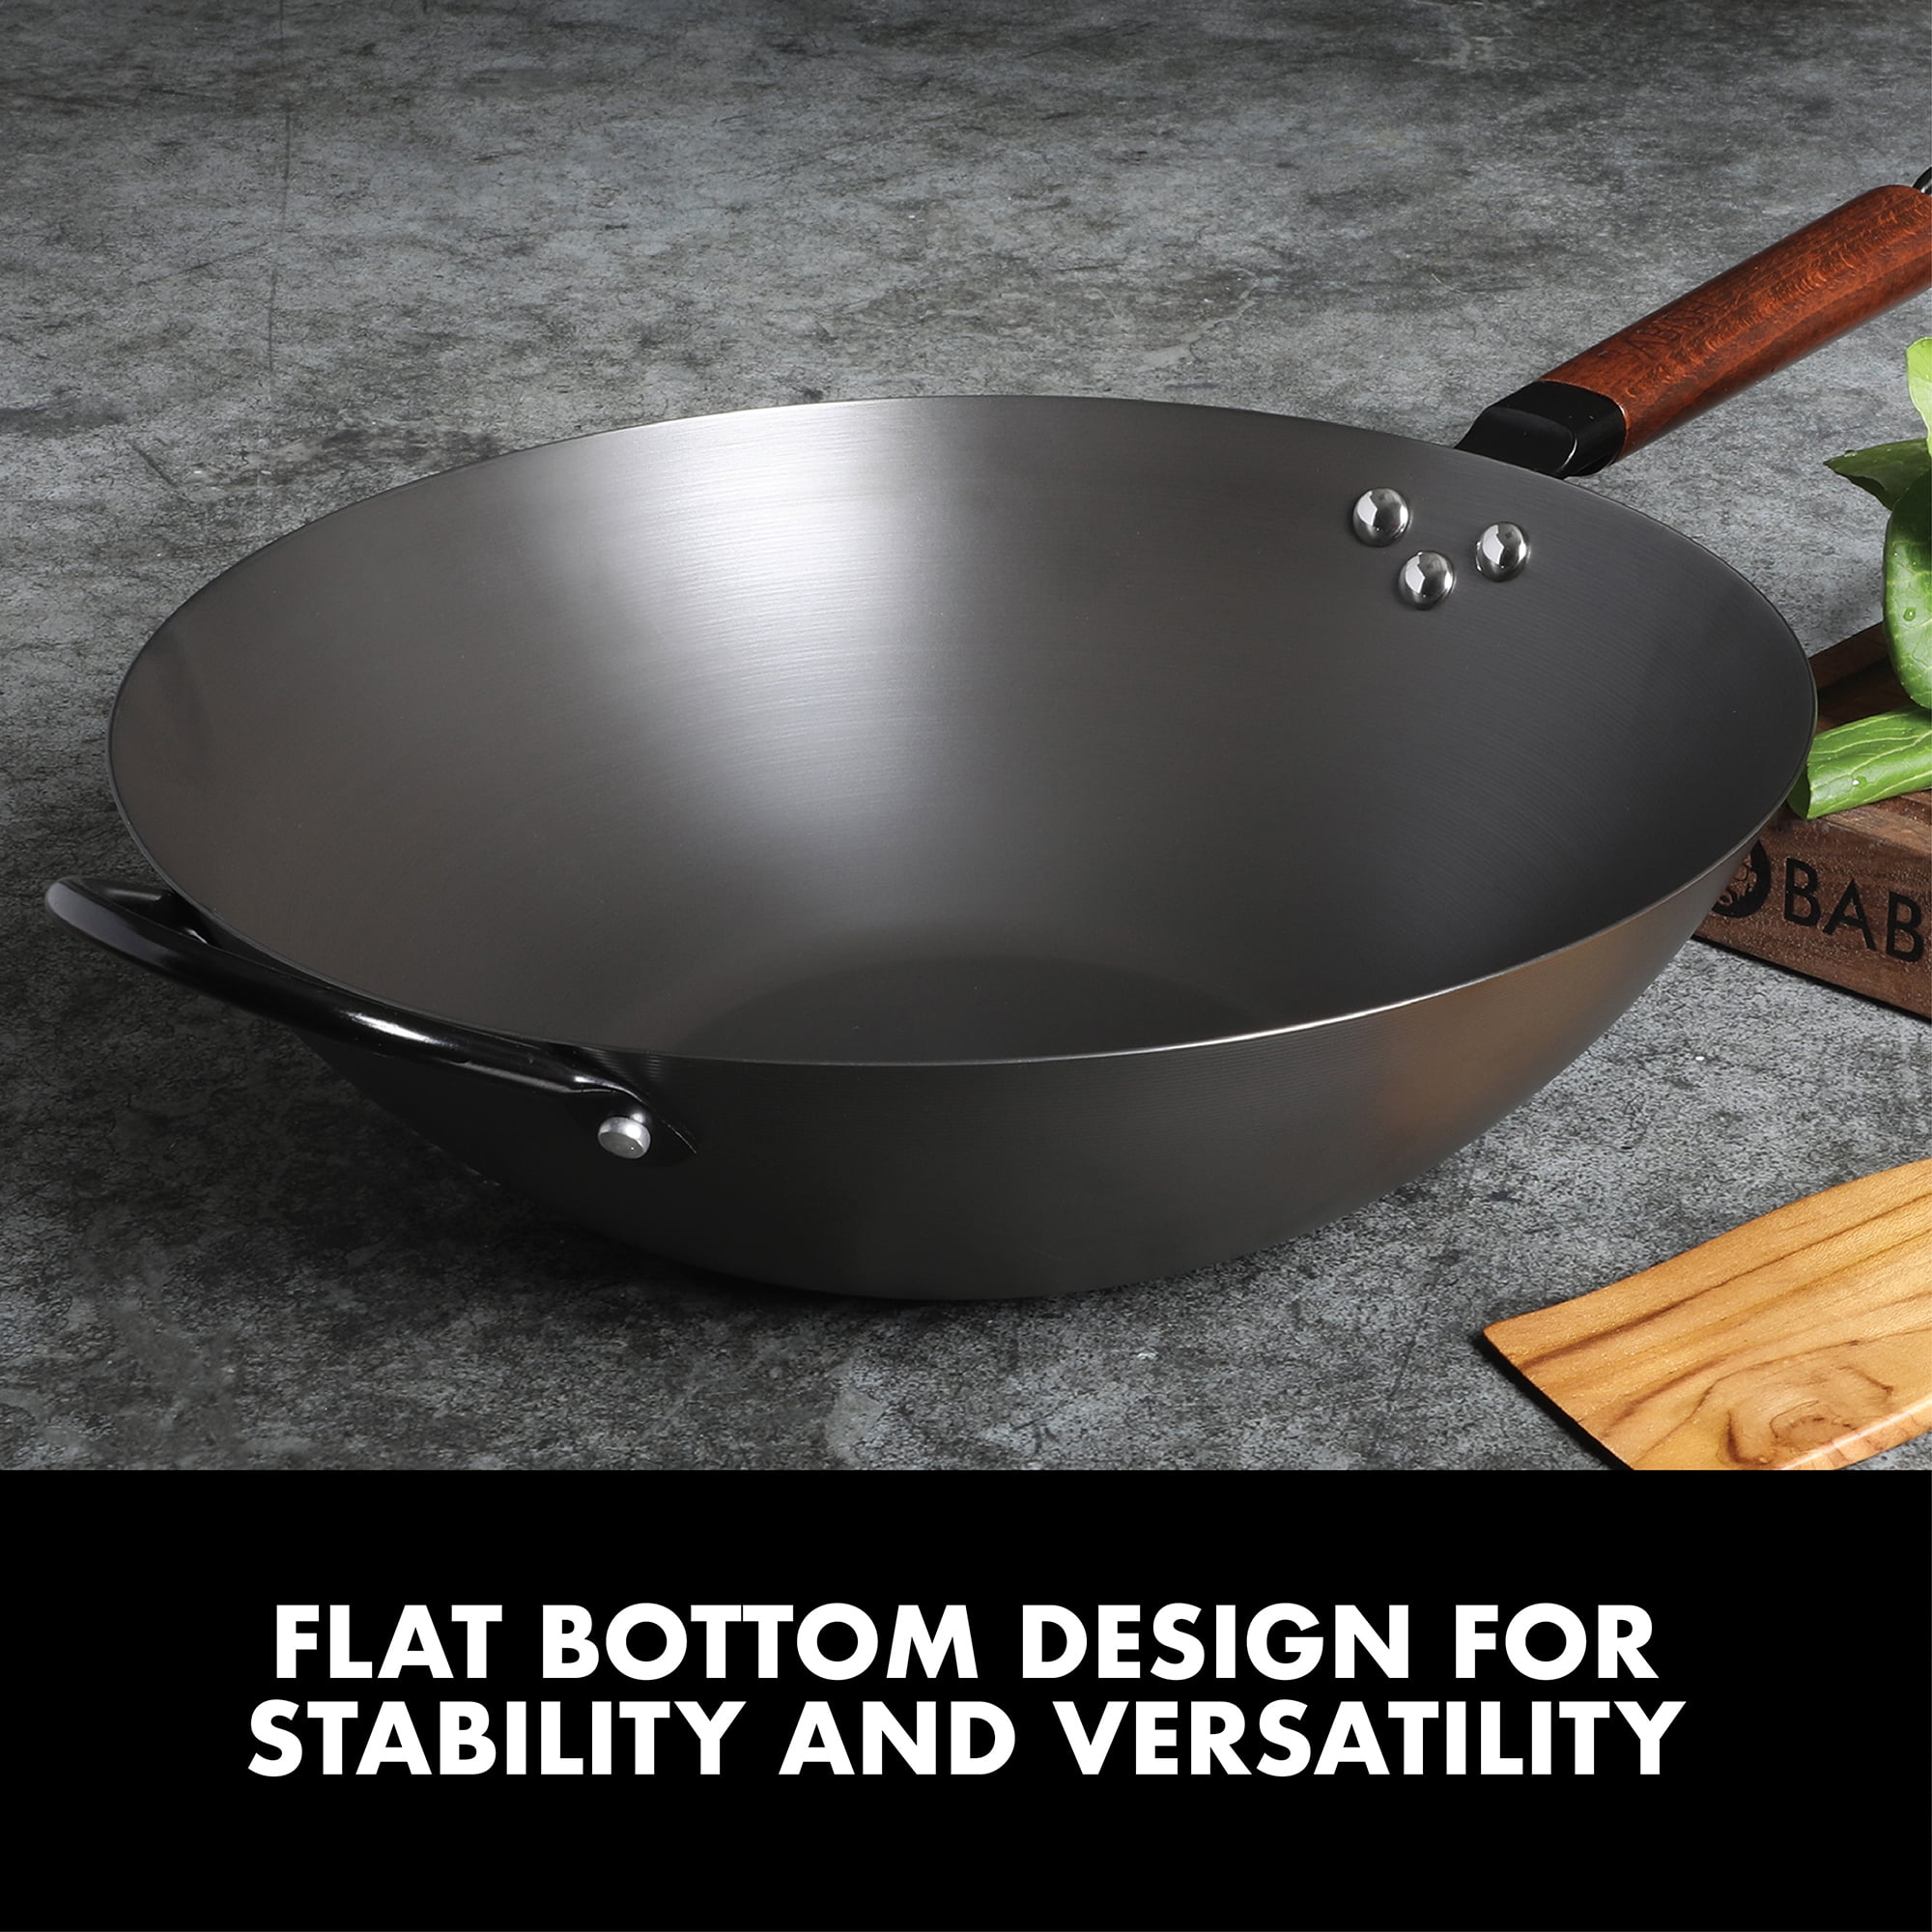 Babish Carbon Steel Flat Bottom Wok and Stir Fry Pan, 14-Inch